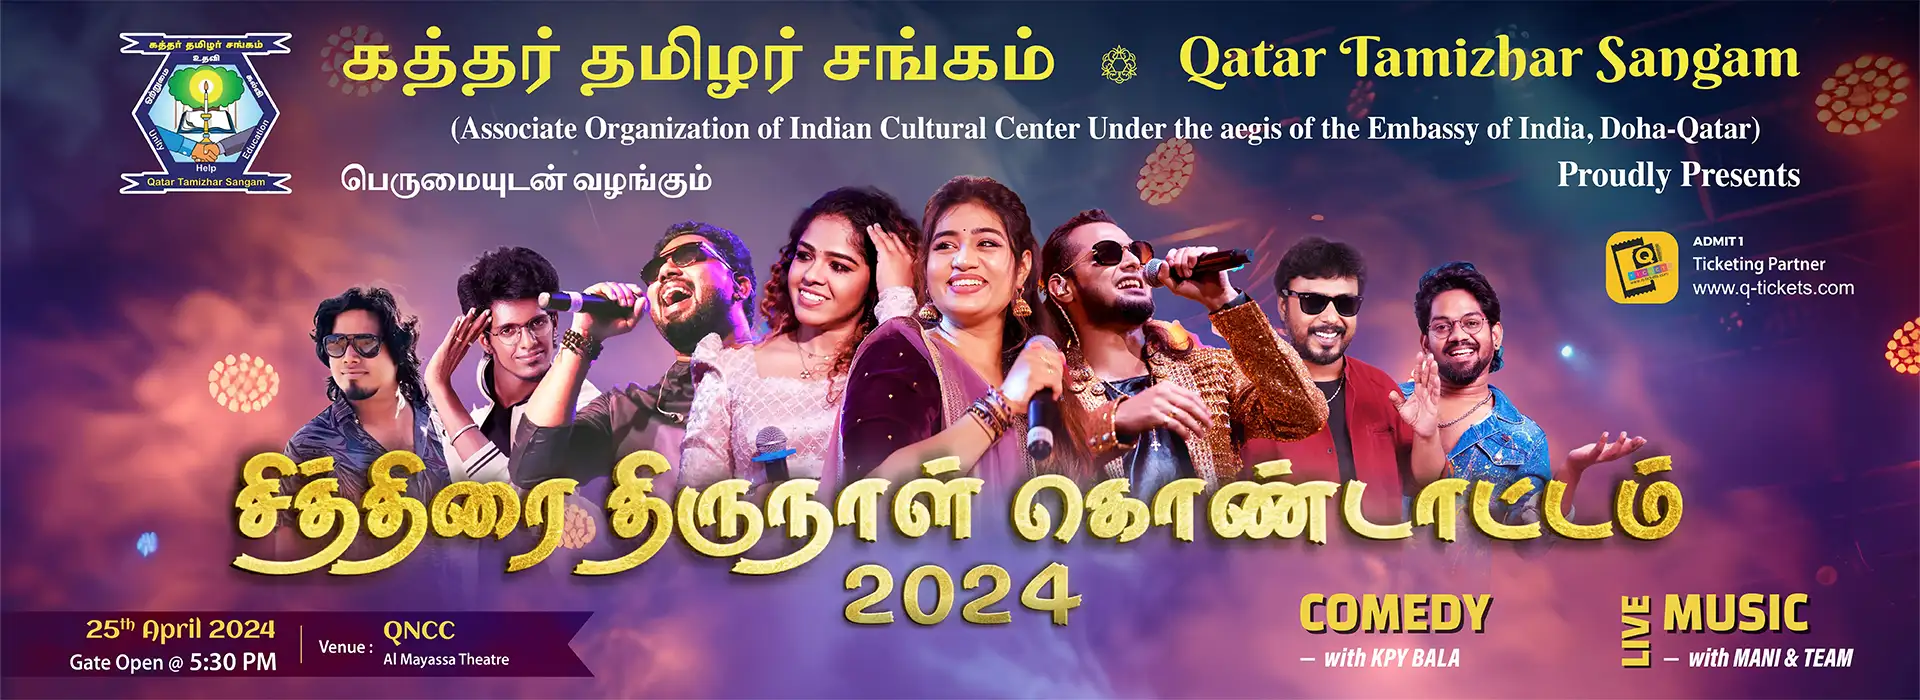 Tamil new year Celebration 2024 / Chitthirai Thirunal Kondattam 2024